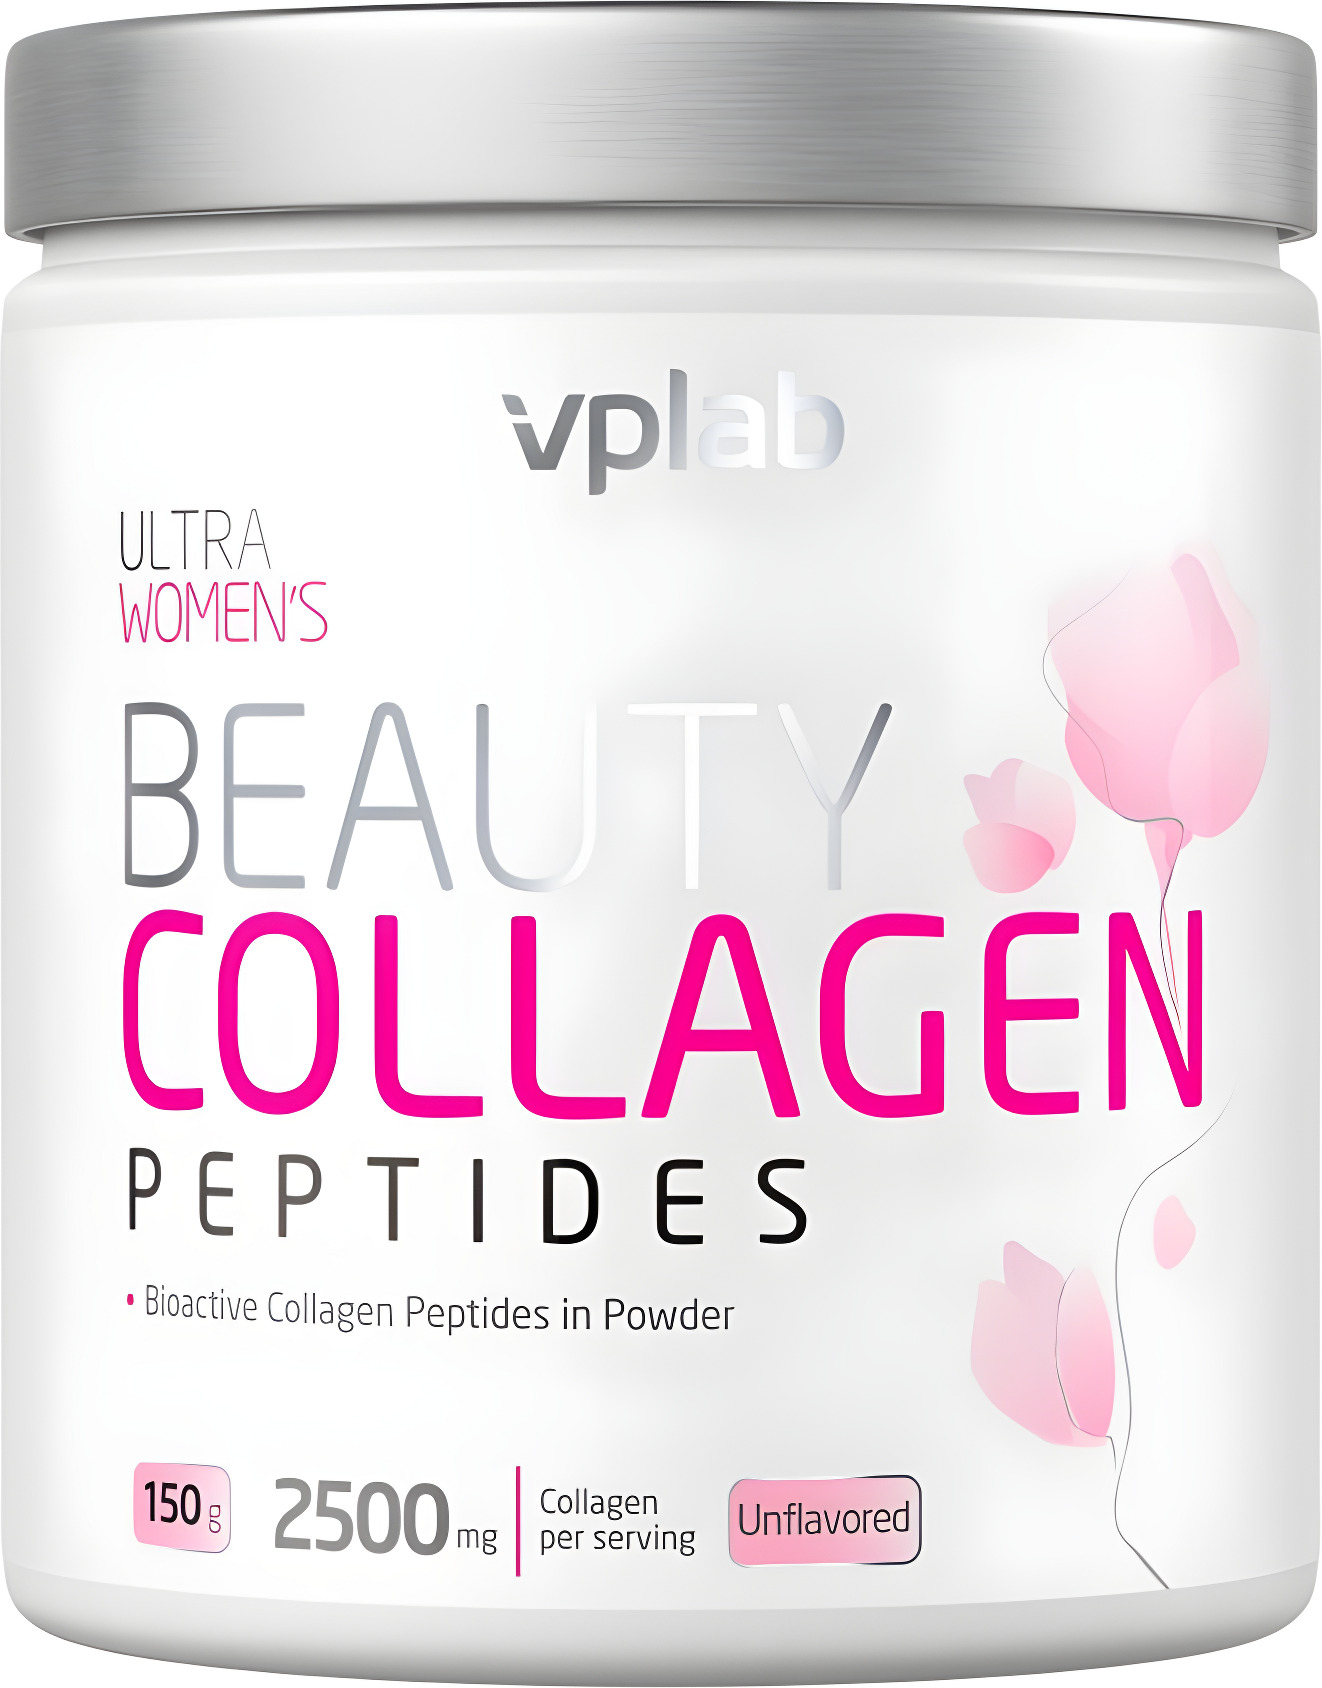 Пептид коллагена цена. ВПЛАБ коллаген для женщин Бьюти 2500мг. Коллаген VPLAB / Beauty Collagen Peptides / 150 g. Коллаген VPLAB Collagen Peptides. ВПЛАБ Бьюти коллаген пептиды VPLAB Beauty Collagen Peptides.